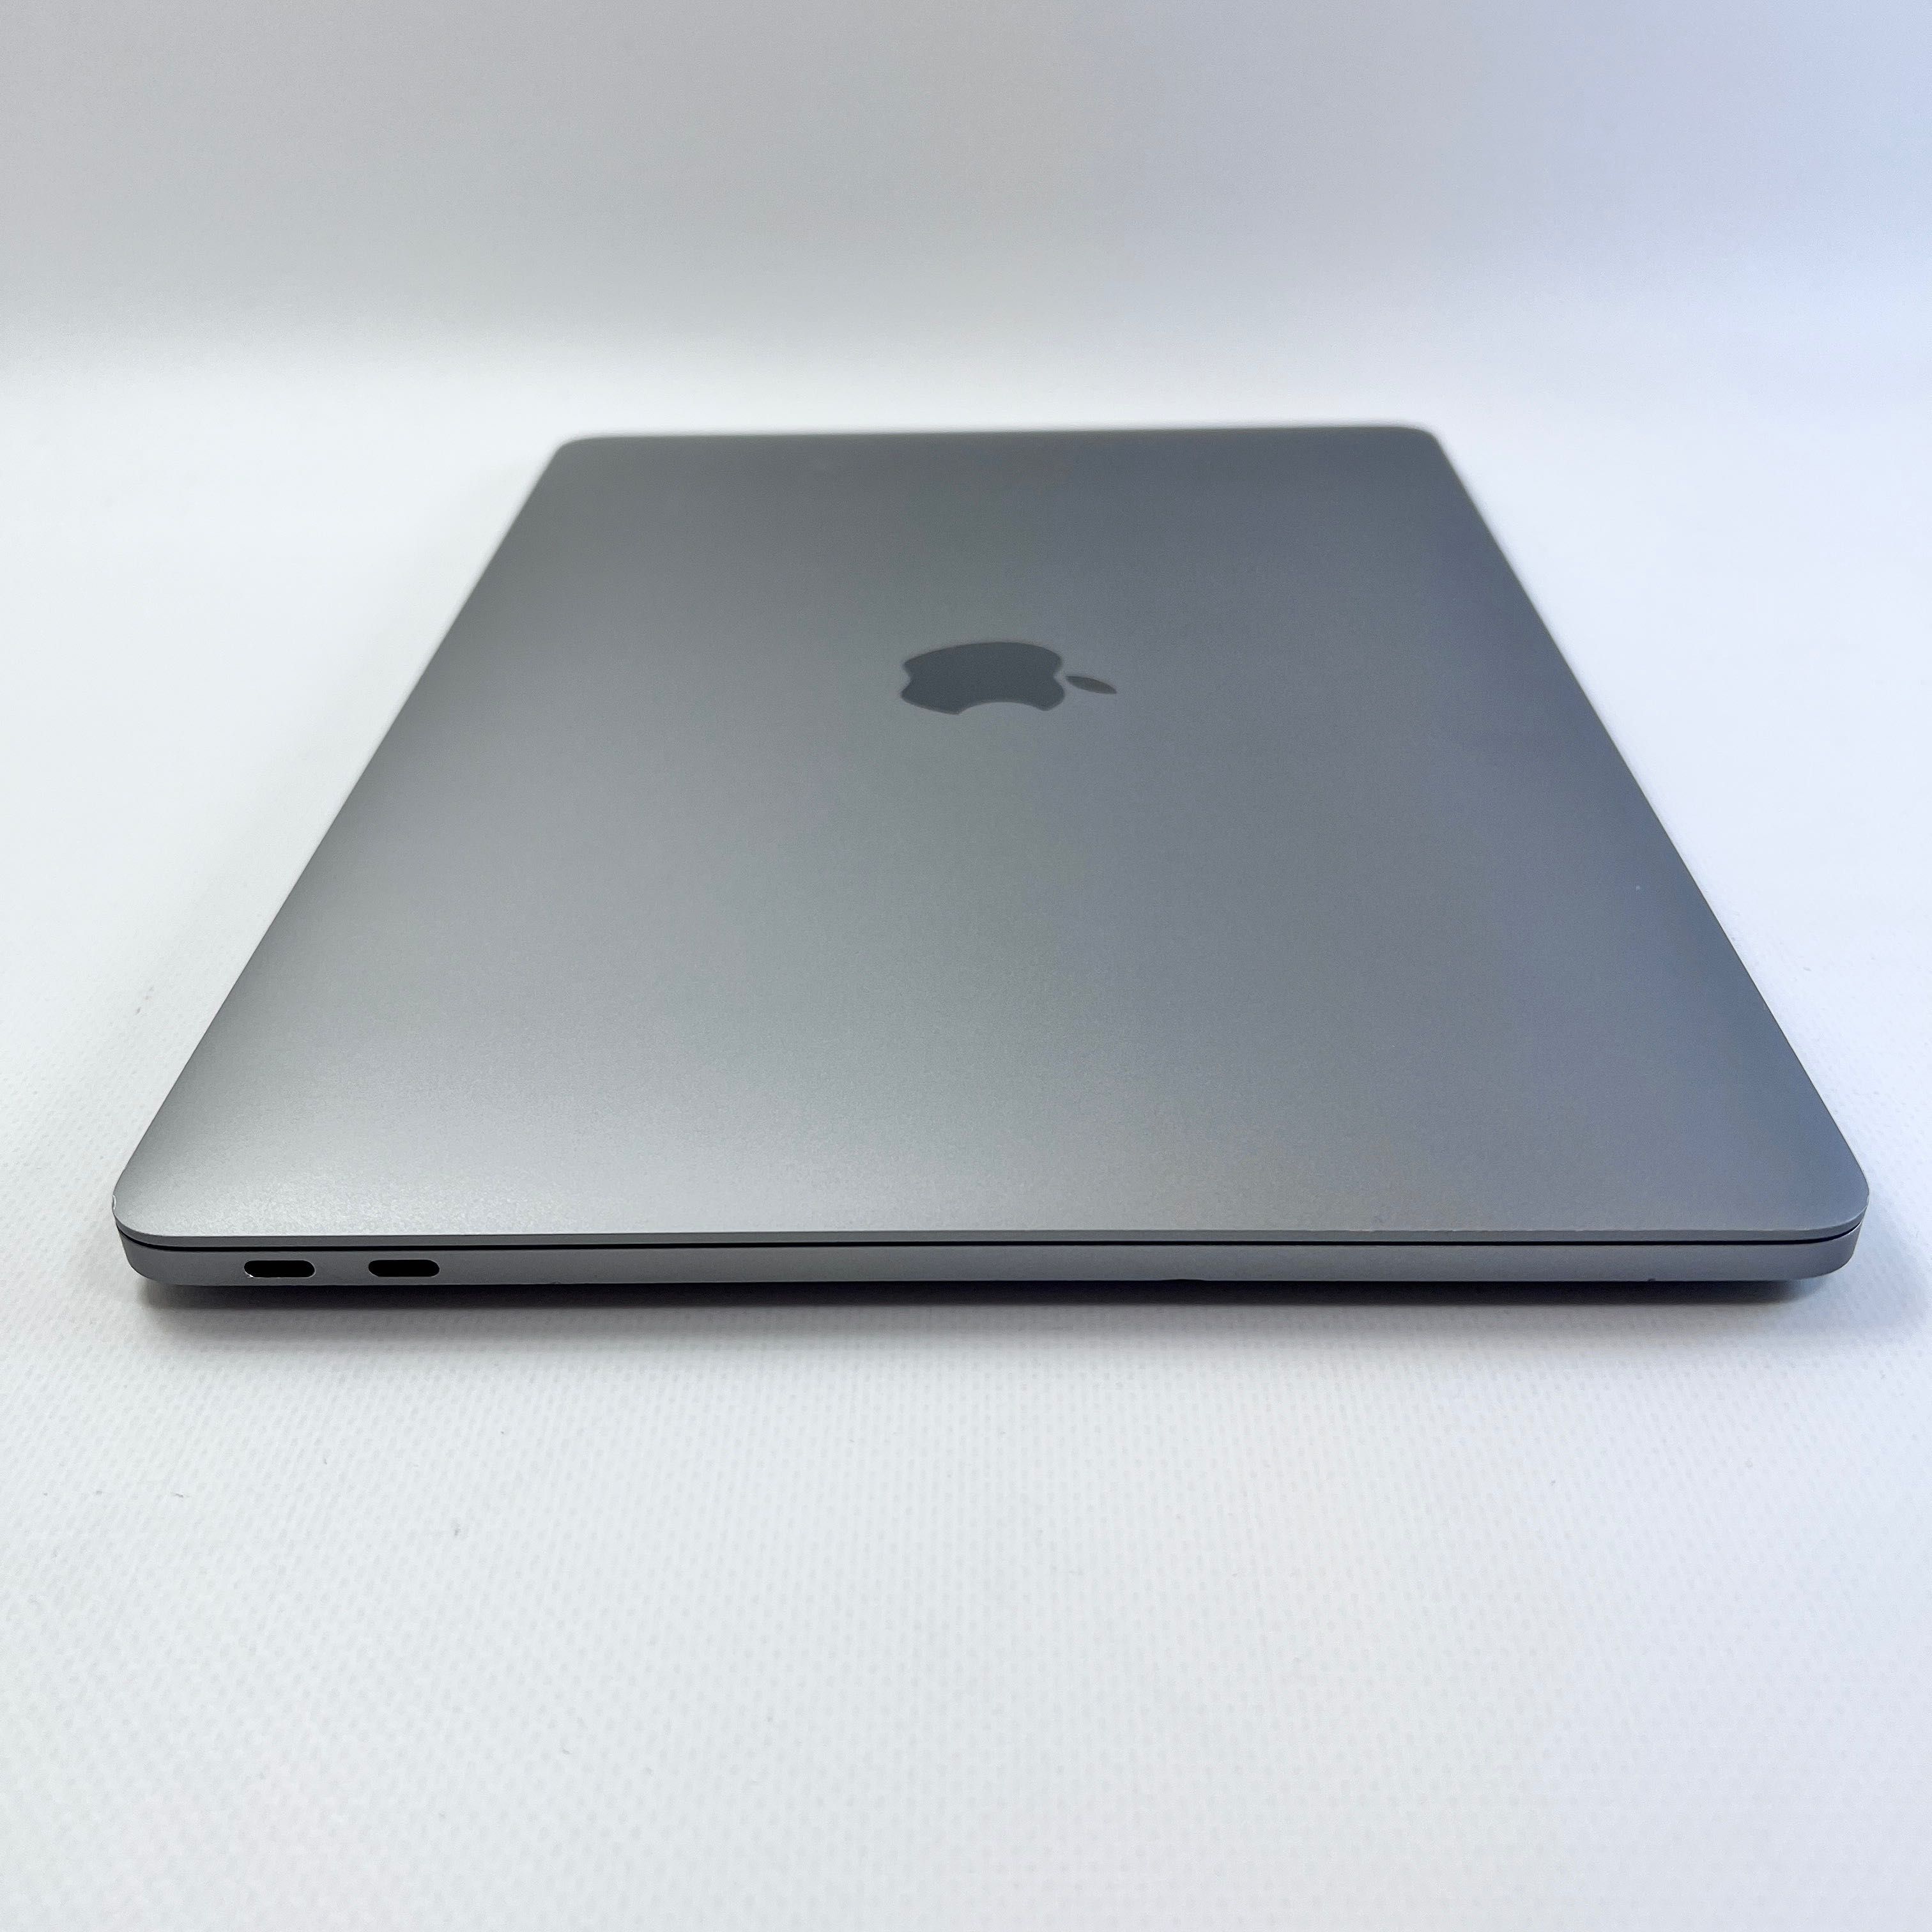 MacBook Pro 13 2017 i5 8GB RAM 128GB SSD Space Gray МАГАЗИН ГАРАНТІЯ